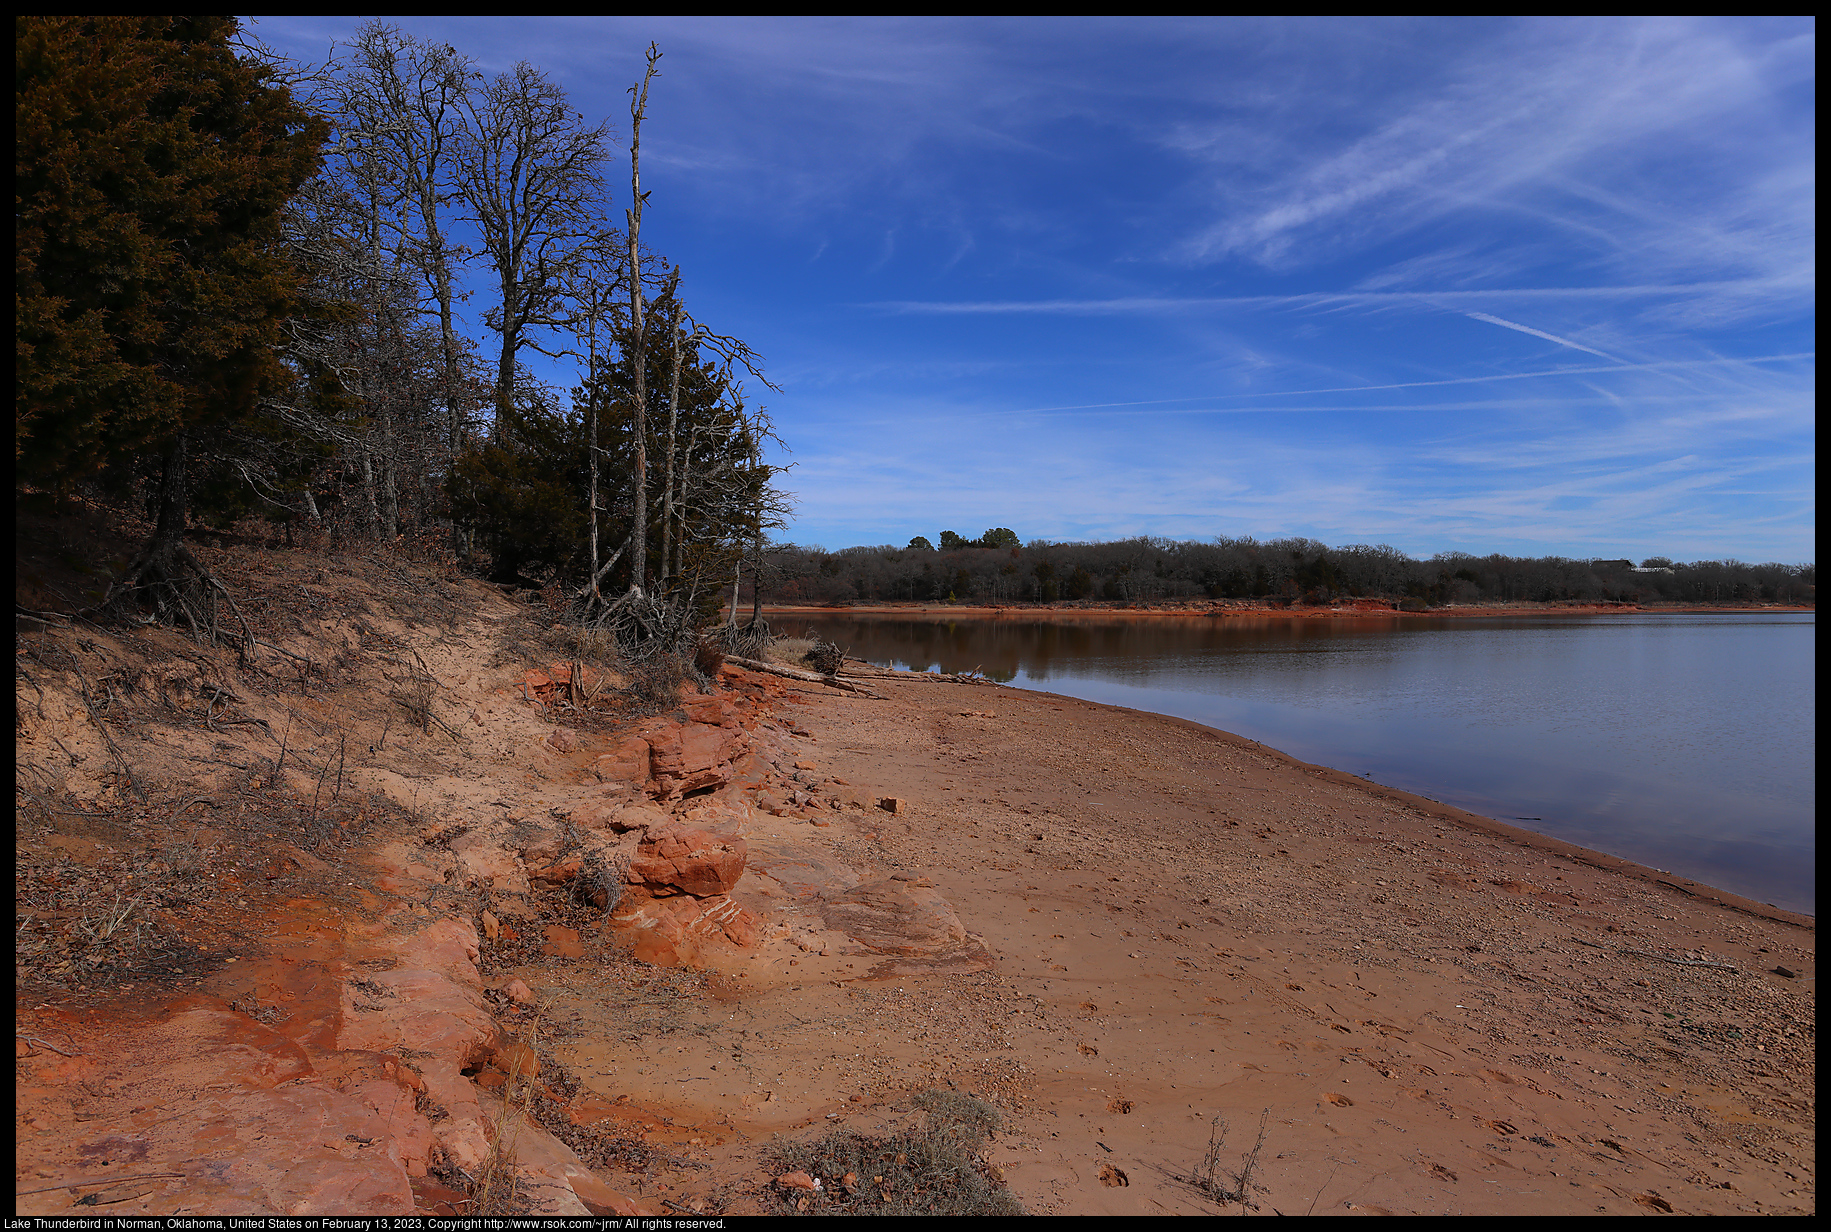 Lake Thunderbird in Norman, Oklahoma, United States on February 13, 2023